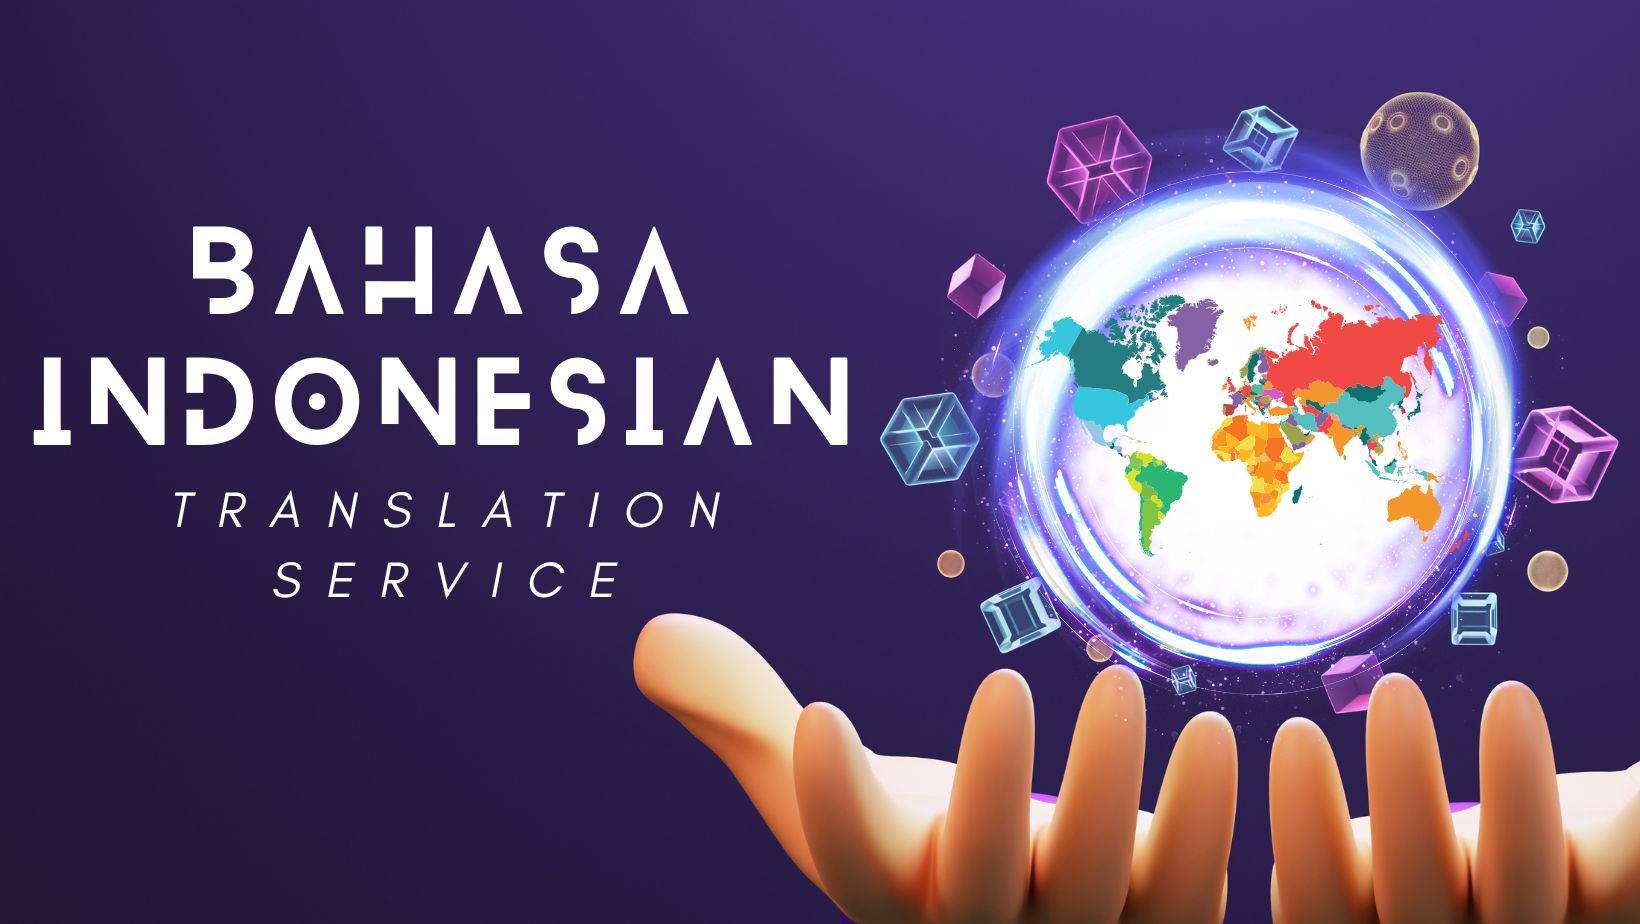 Bahasa Indonesian Translation Service